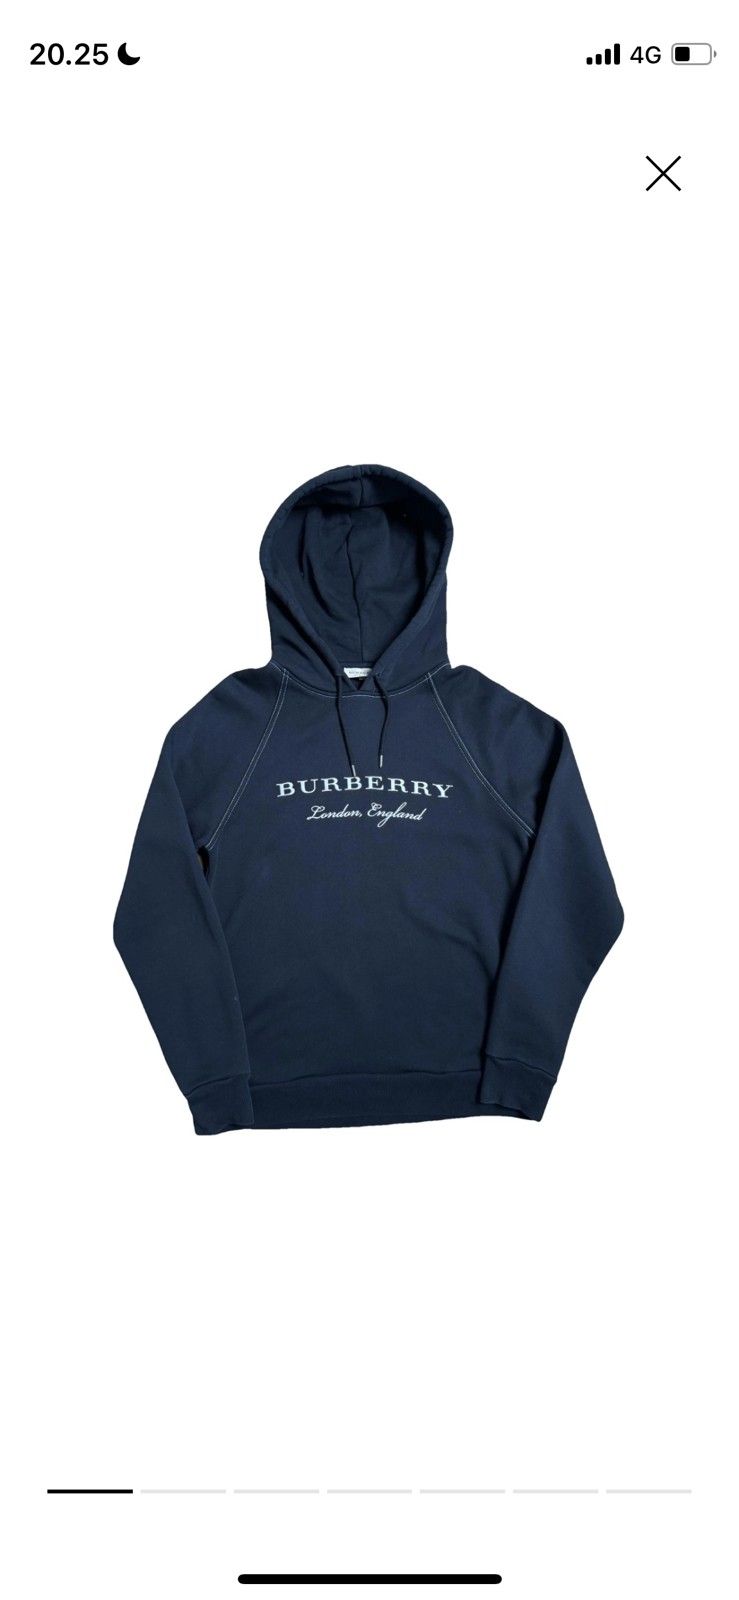 Burberry (huppari)